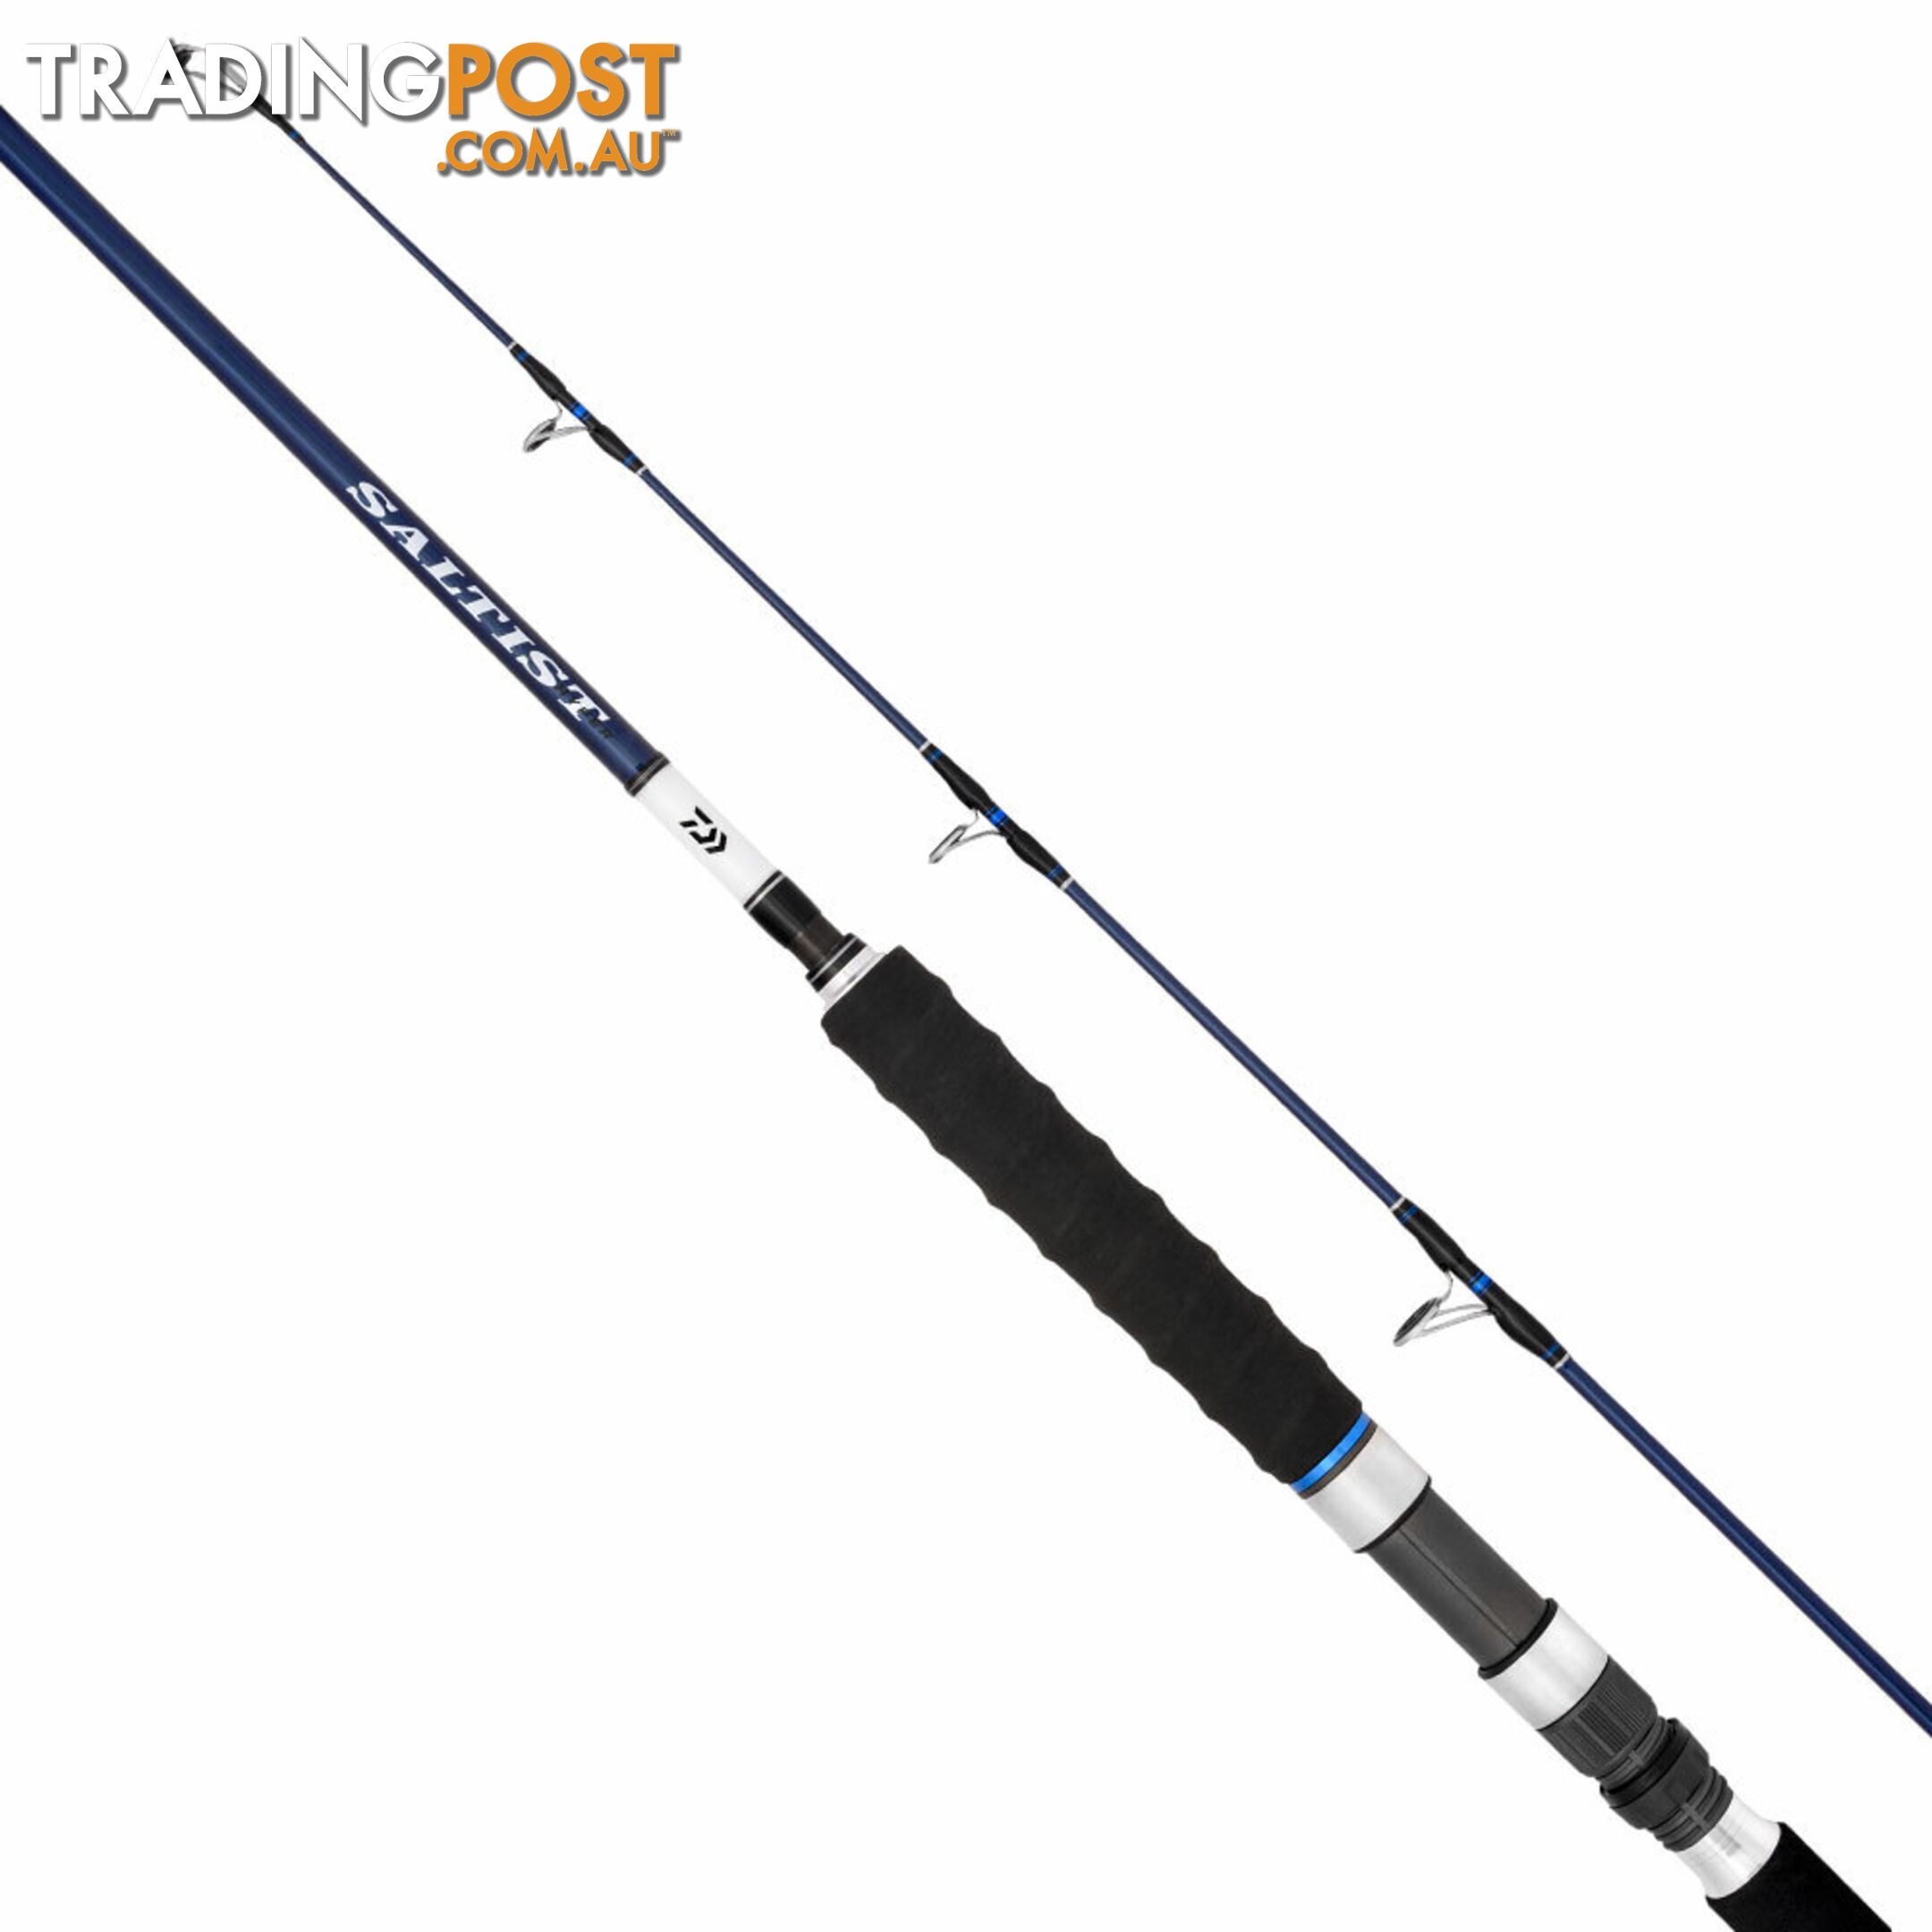 Daiwa Saltist Hyper Fishing Rods - Hyper HT - Daiwa Fishing